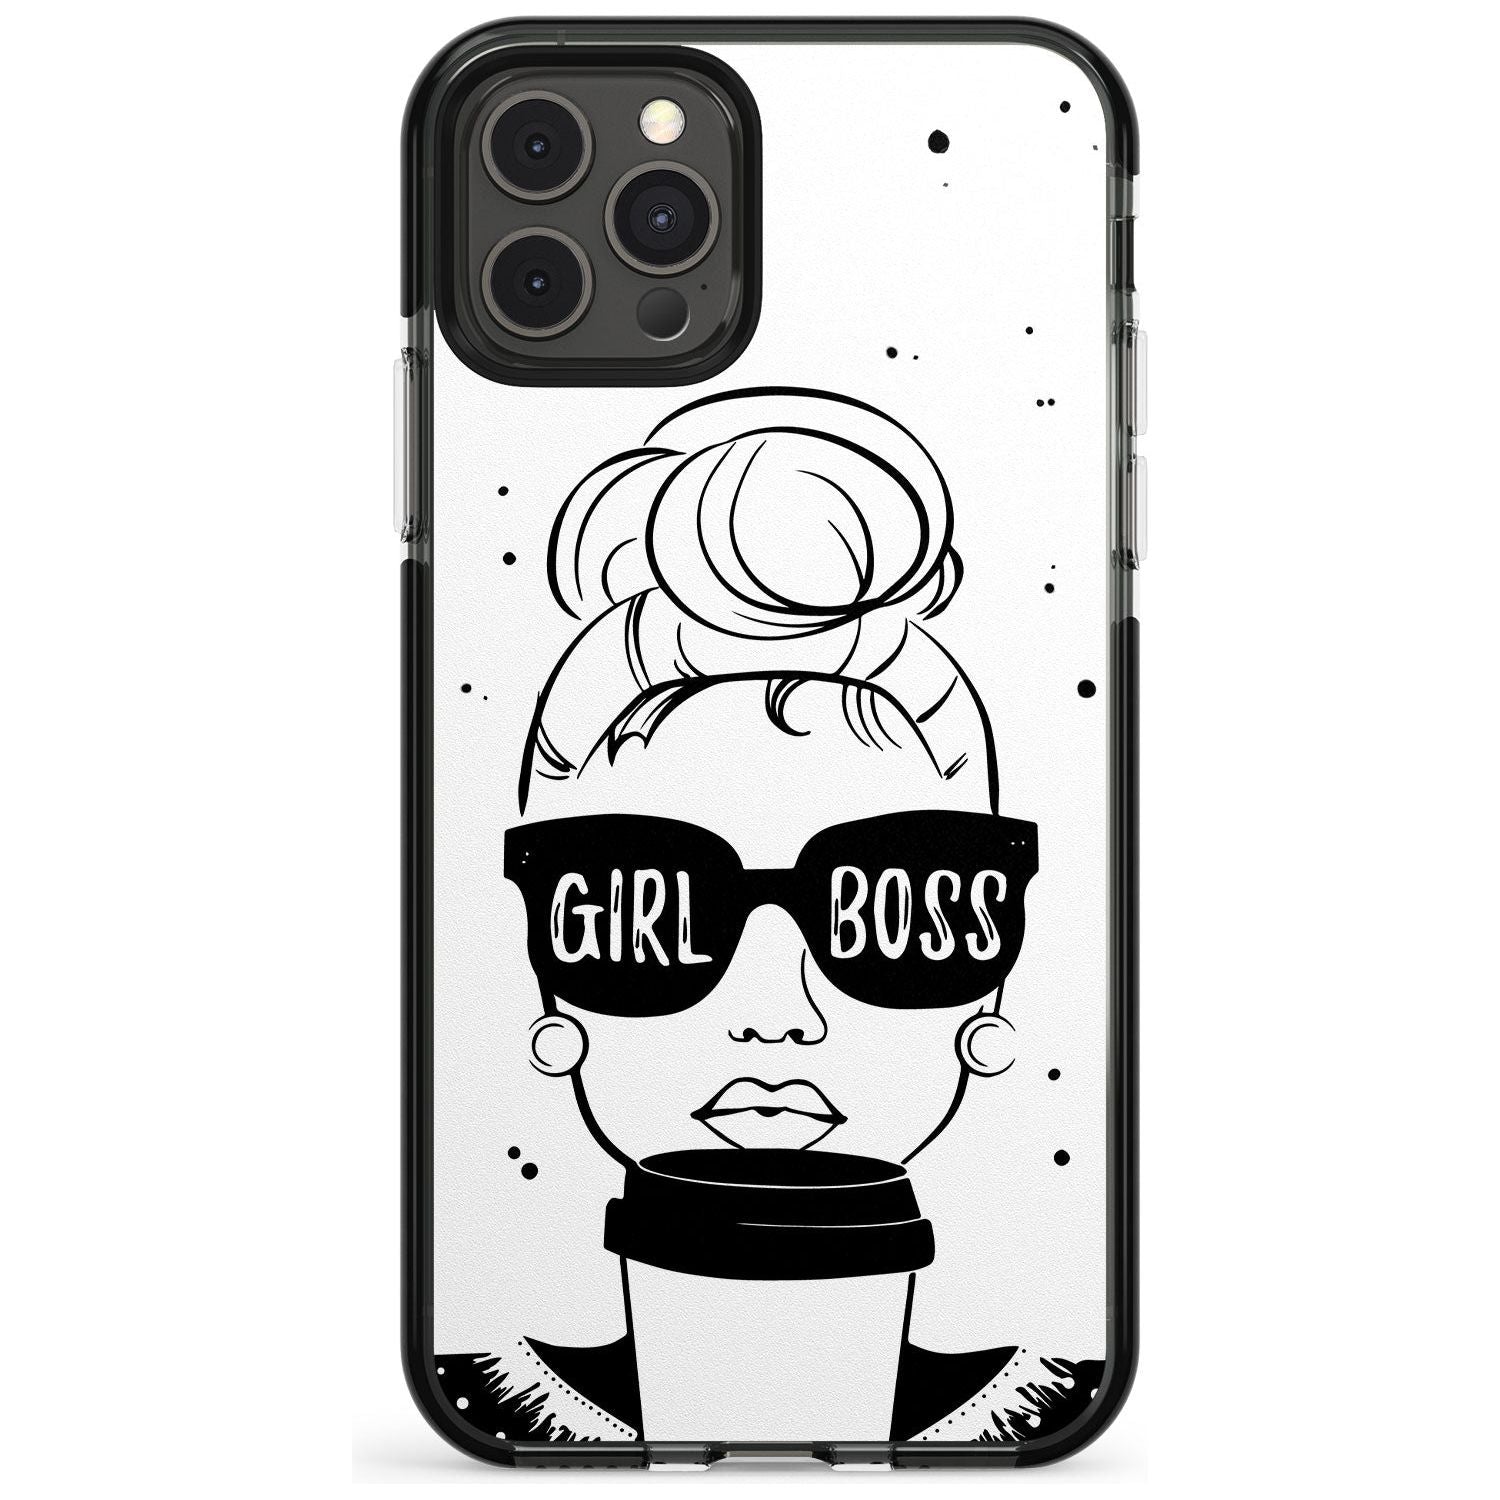 Girl Boss Black Impact Phone Case for iPhone 11